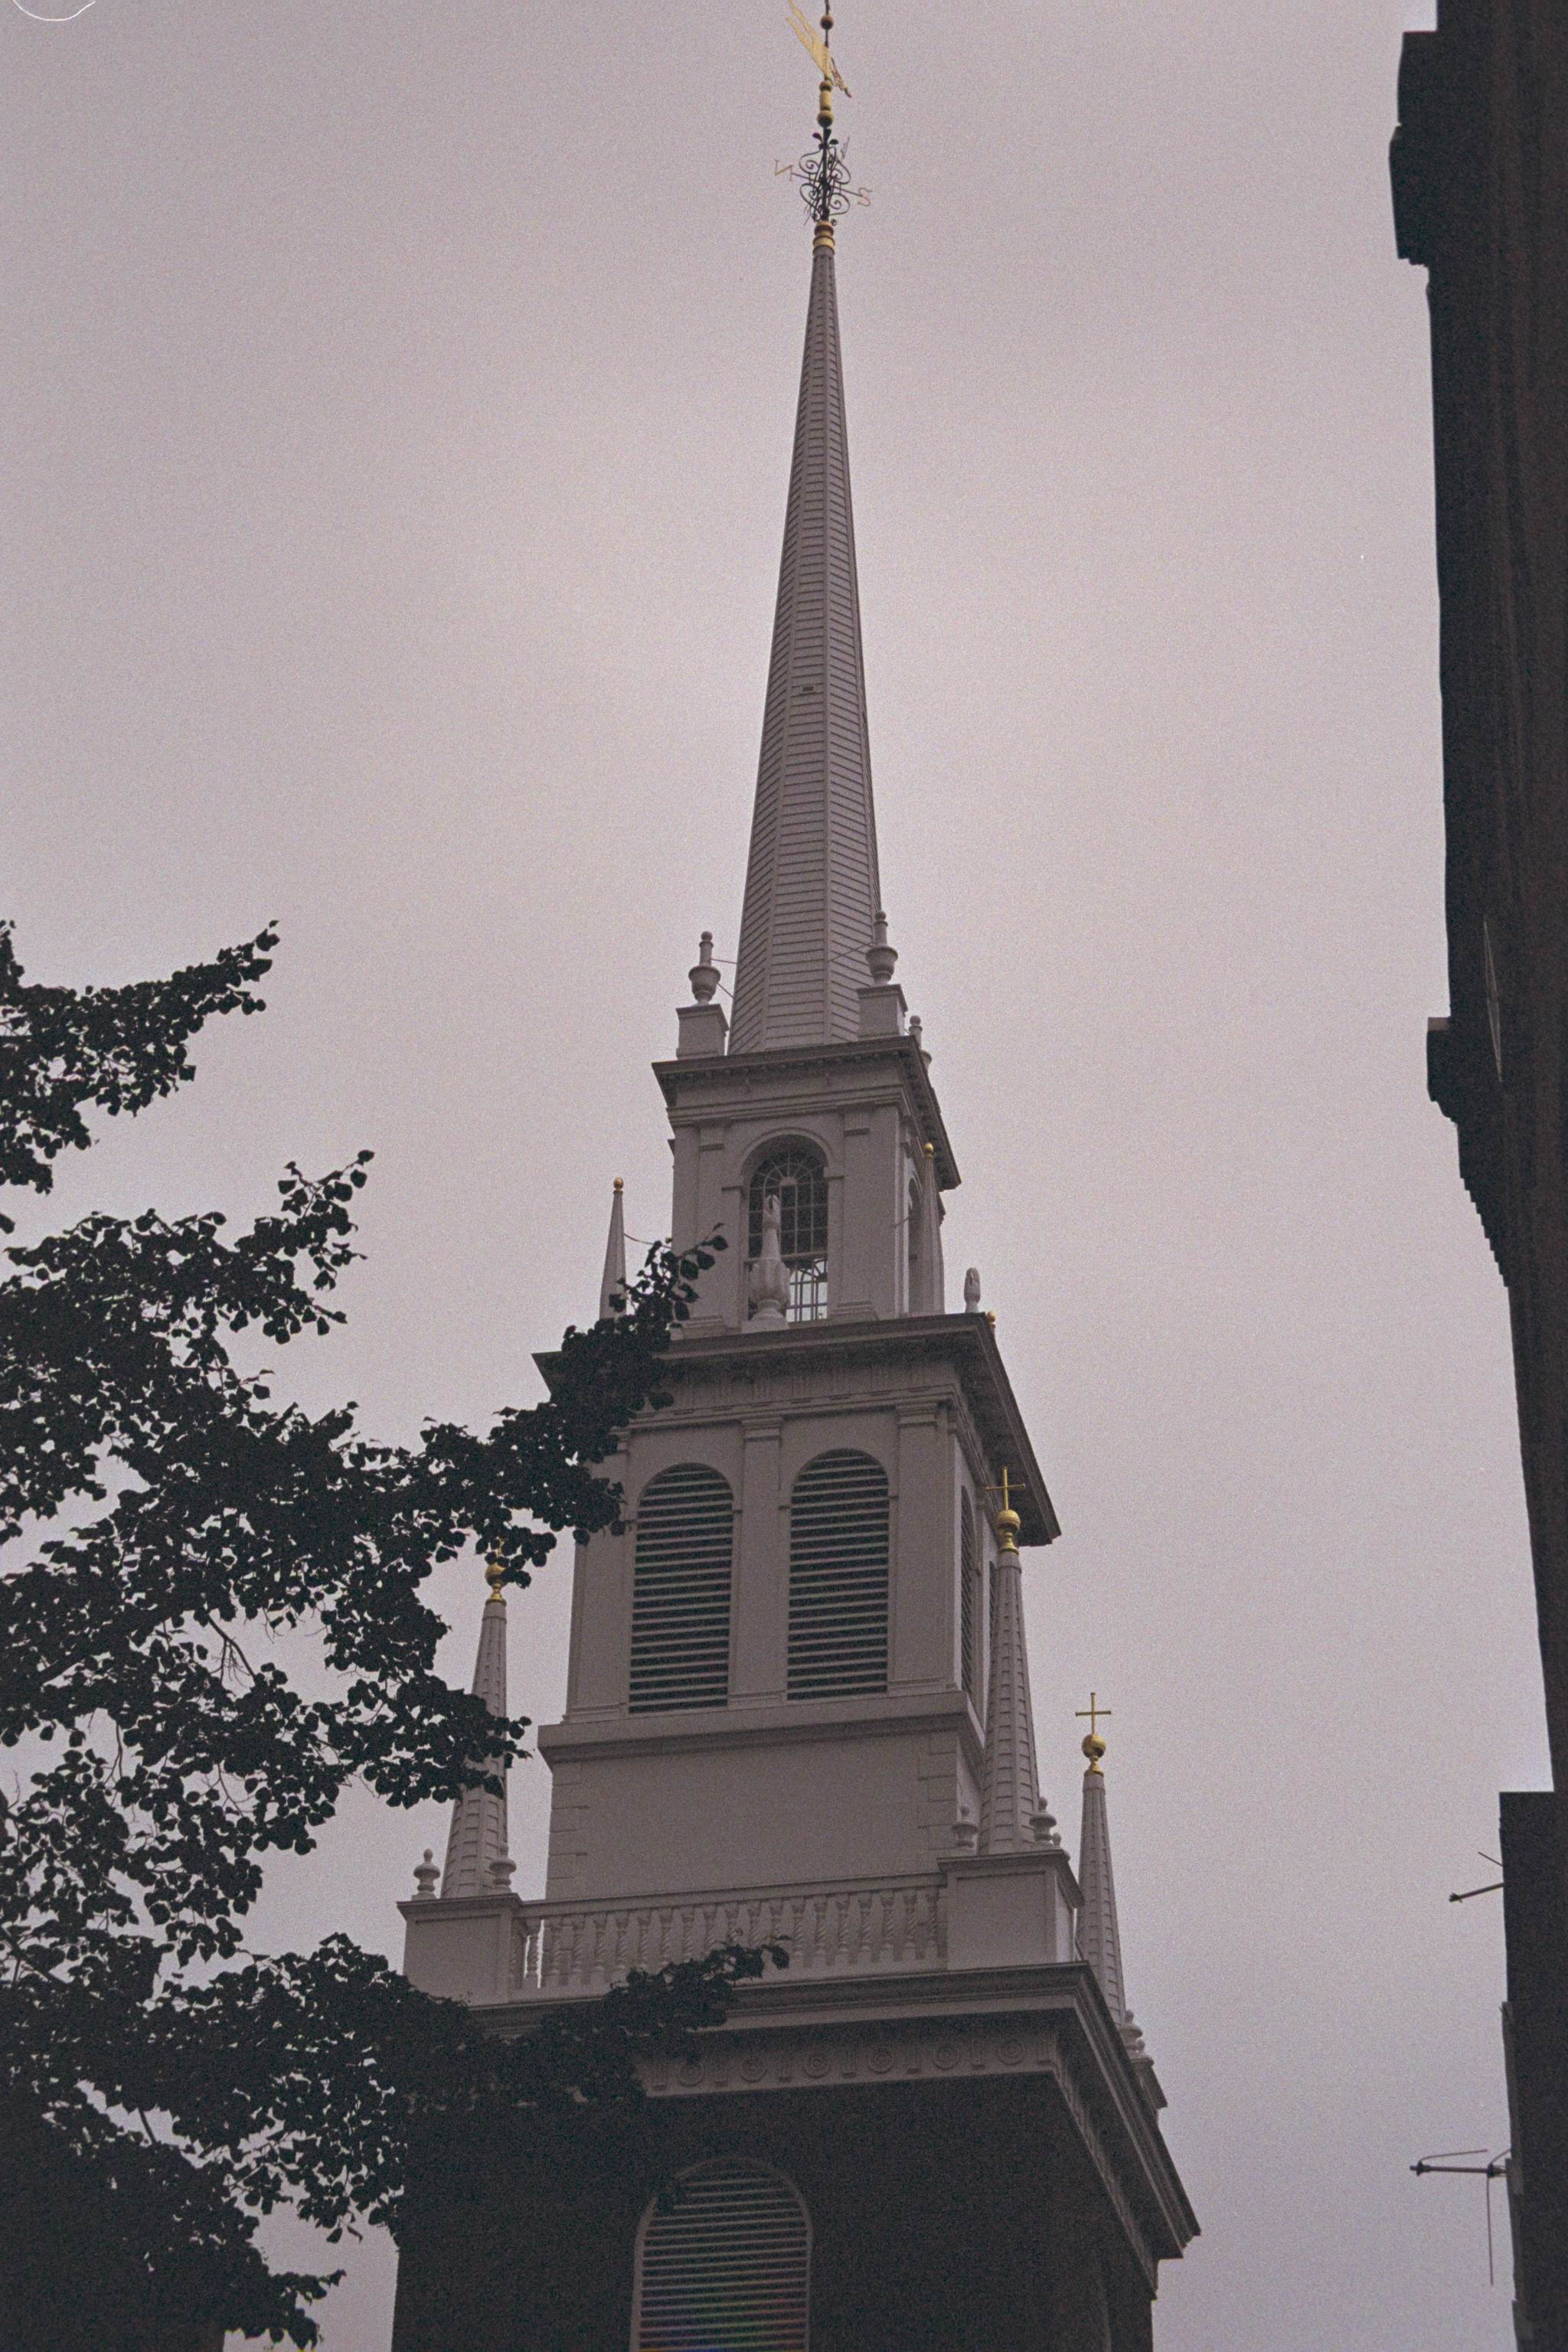 File:Old North Church Steeple.jpg - Wikimedia Commons